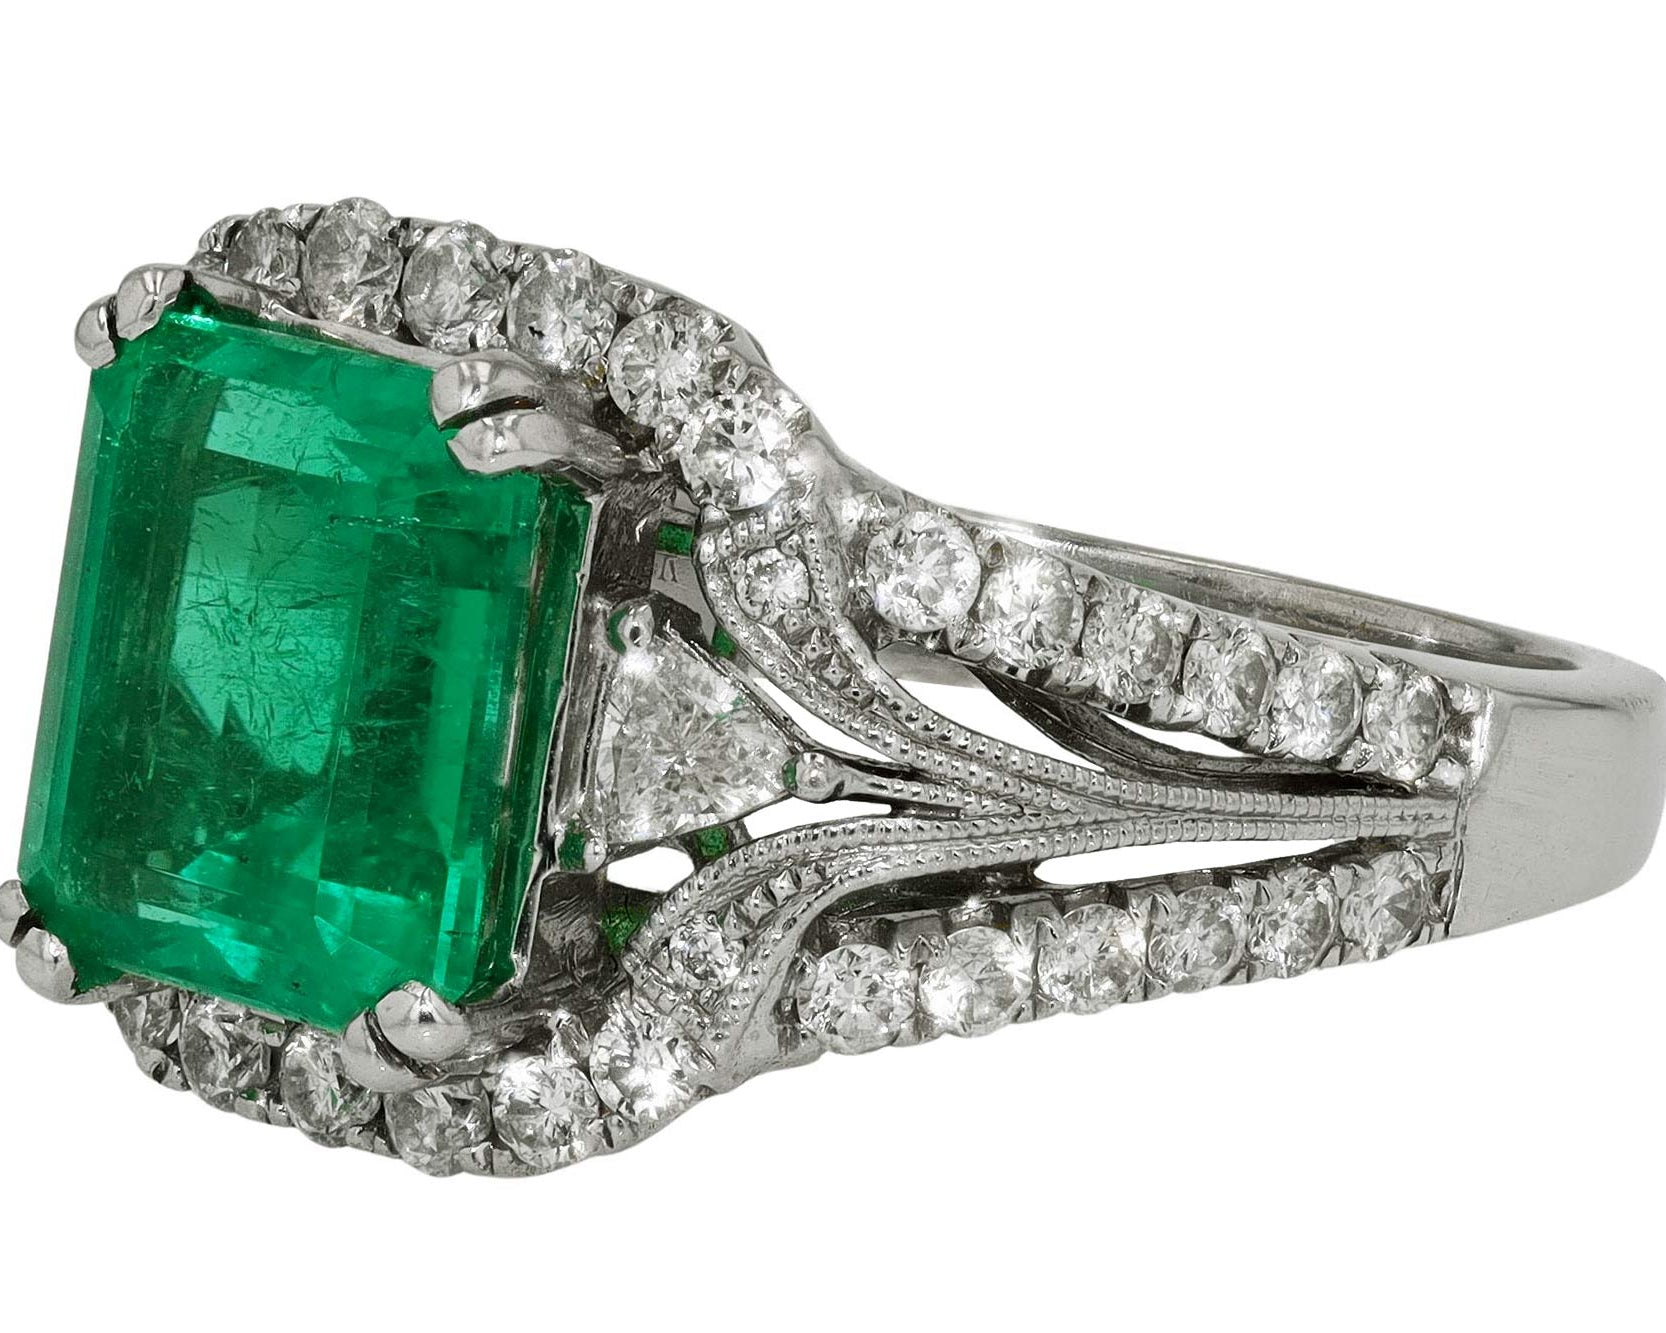 Vintage Emerald Cocktail Ring